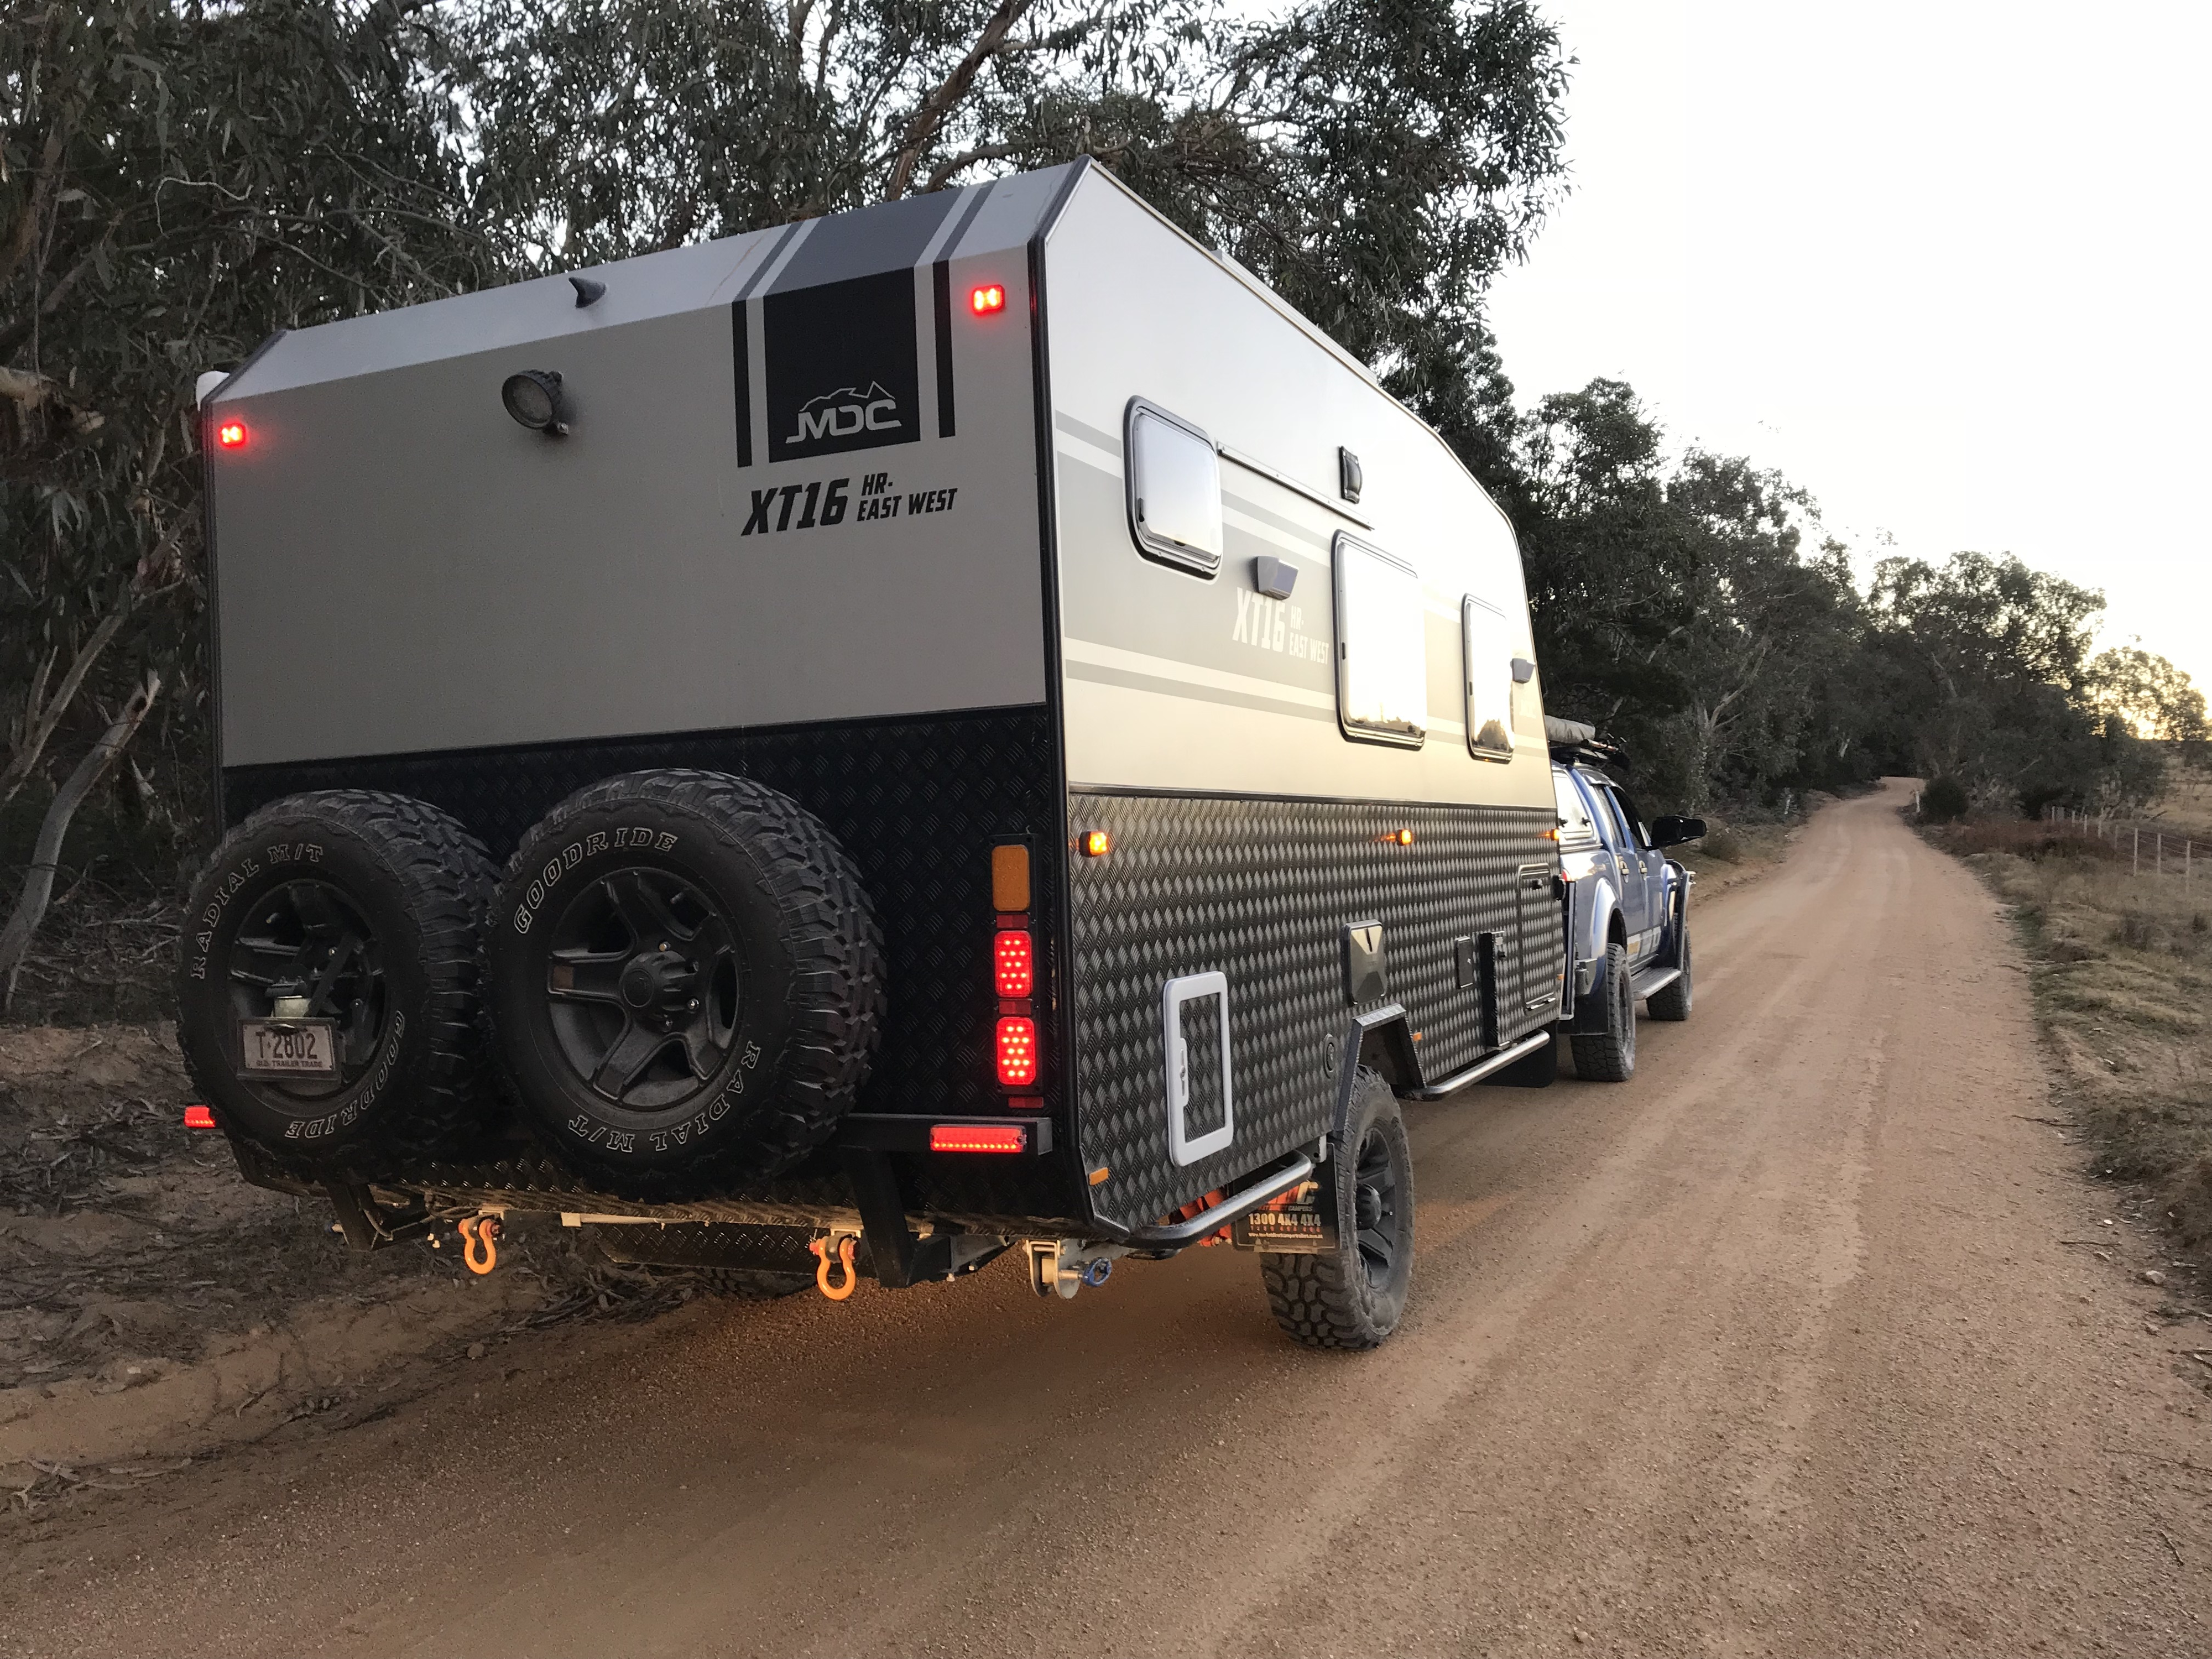 Road Trips Australia Episode 3